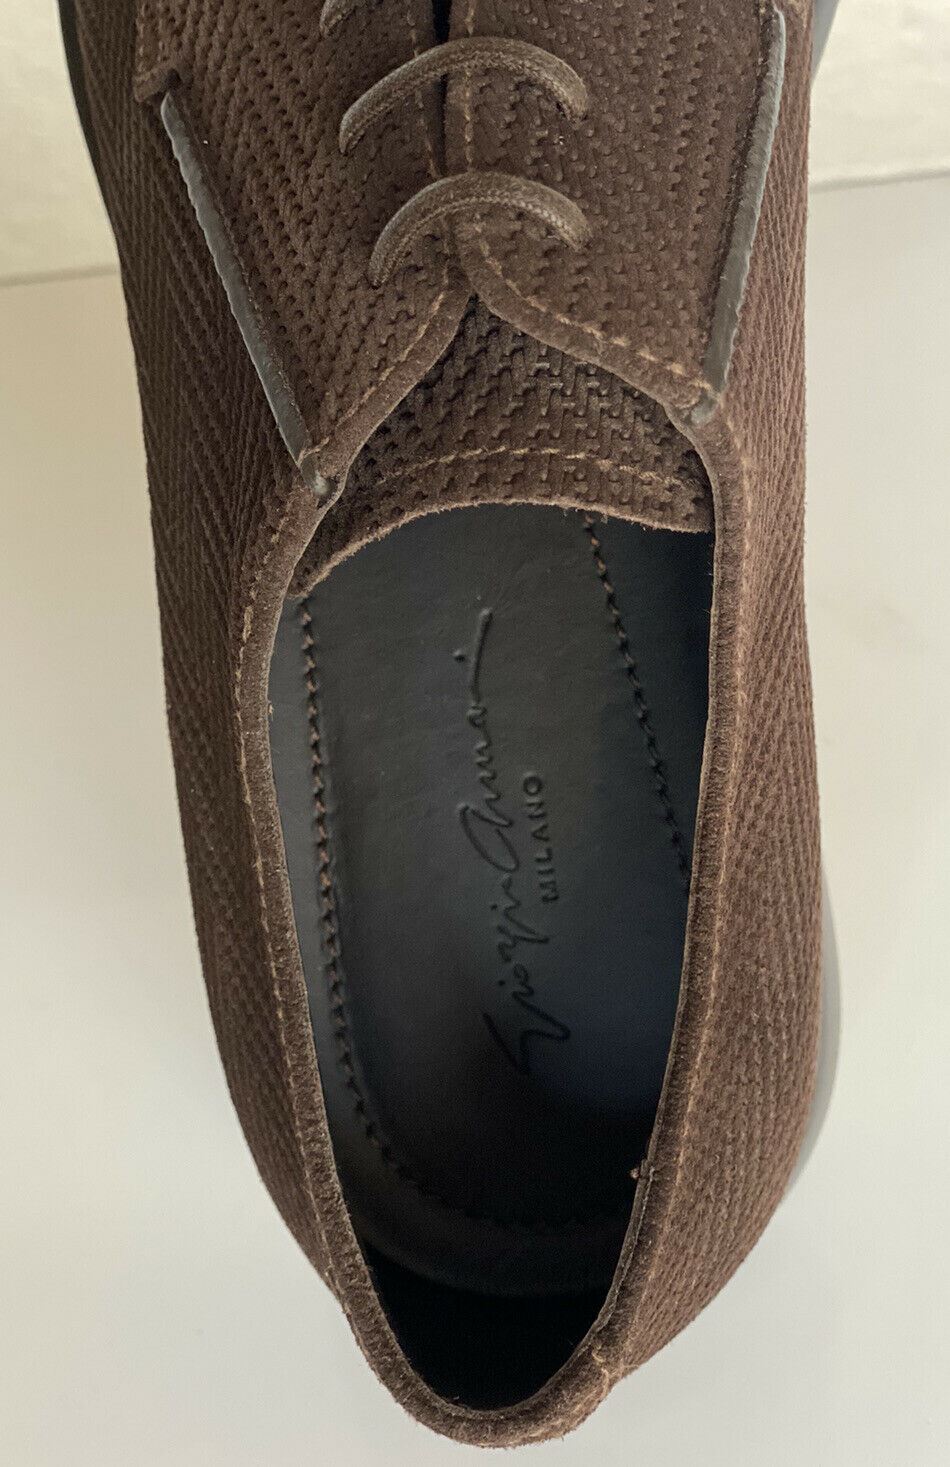 NIB $795 Giorgio Armani Men’s Brown Derby Laced Shoes 7.5 US (40.5) IT X2C629